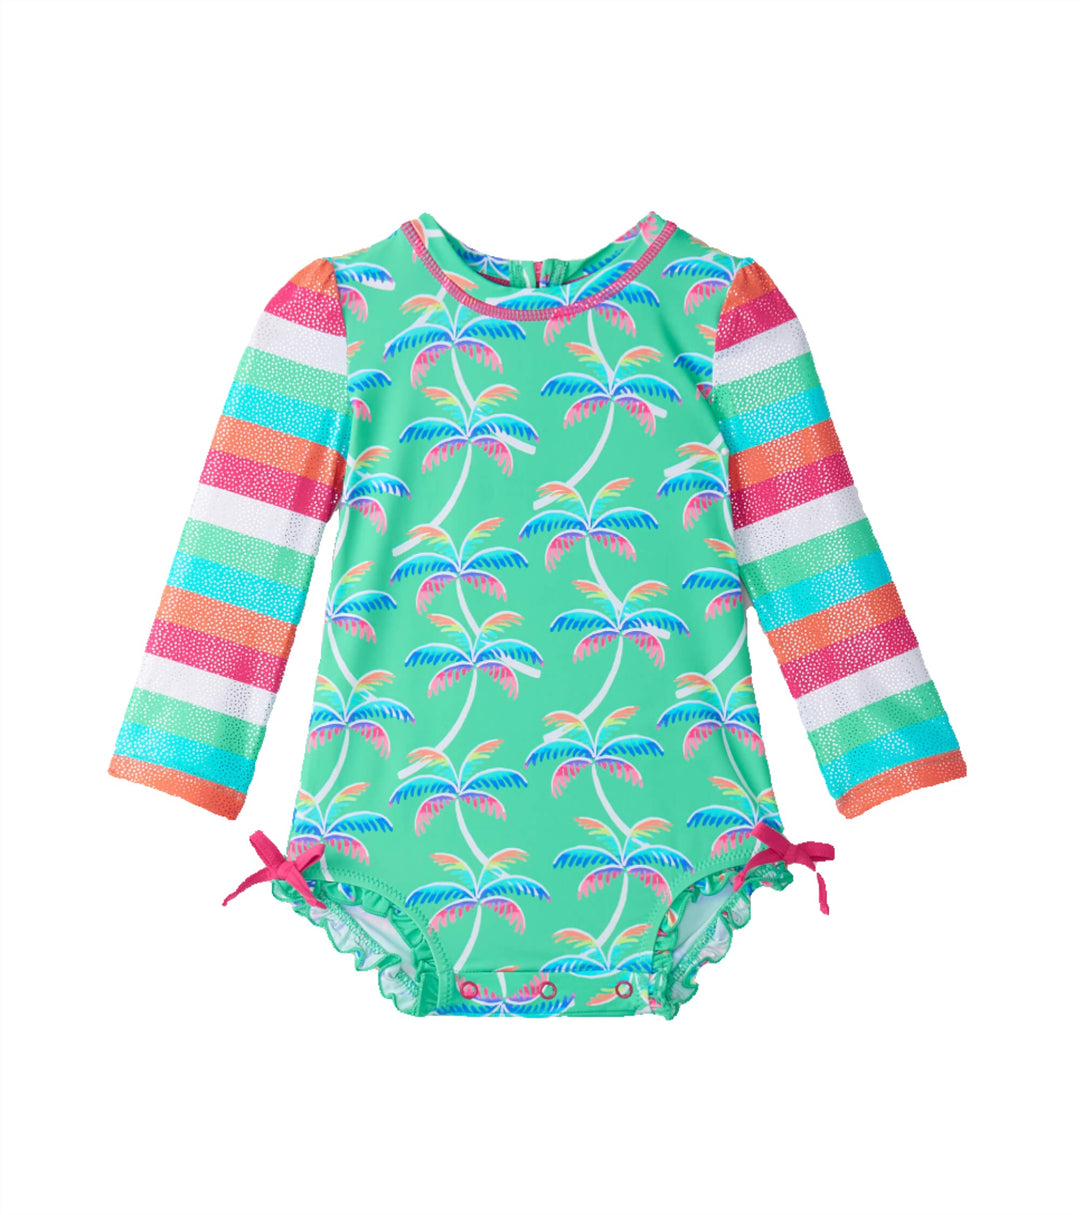 Hatley Rashguard Swimsuit (Rainbow Palm)